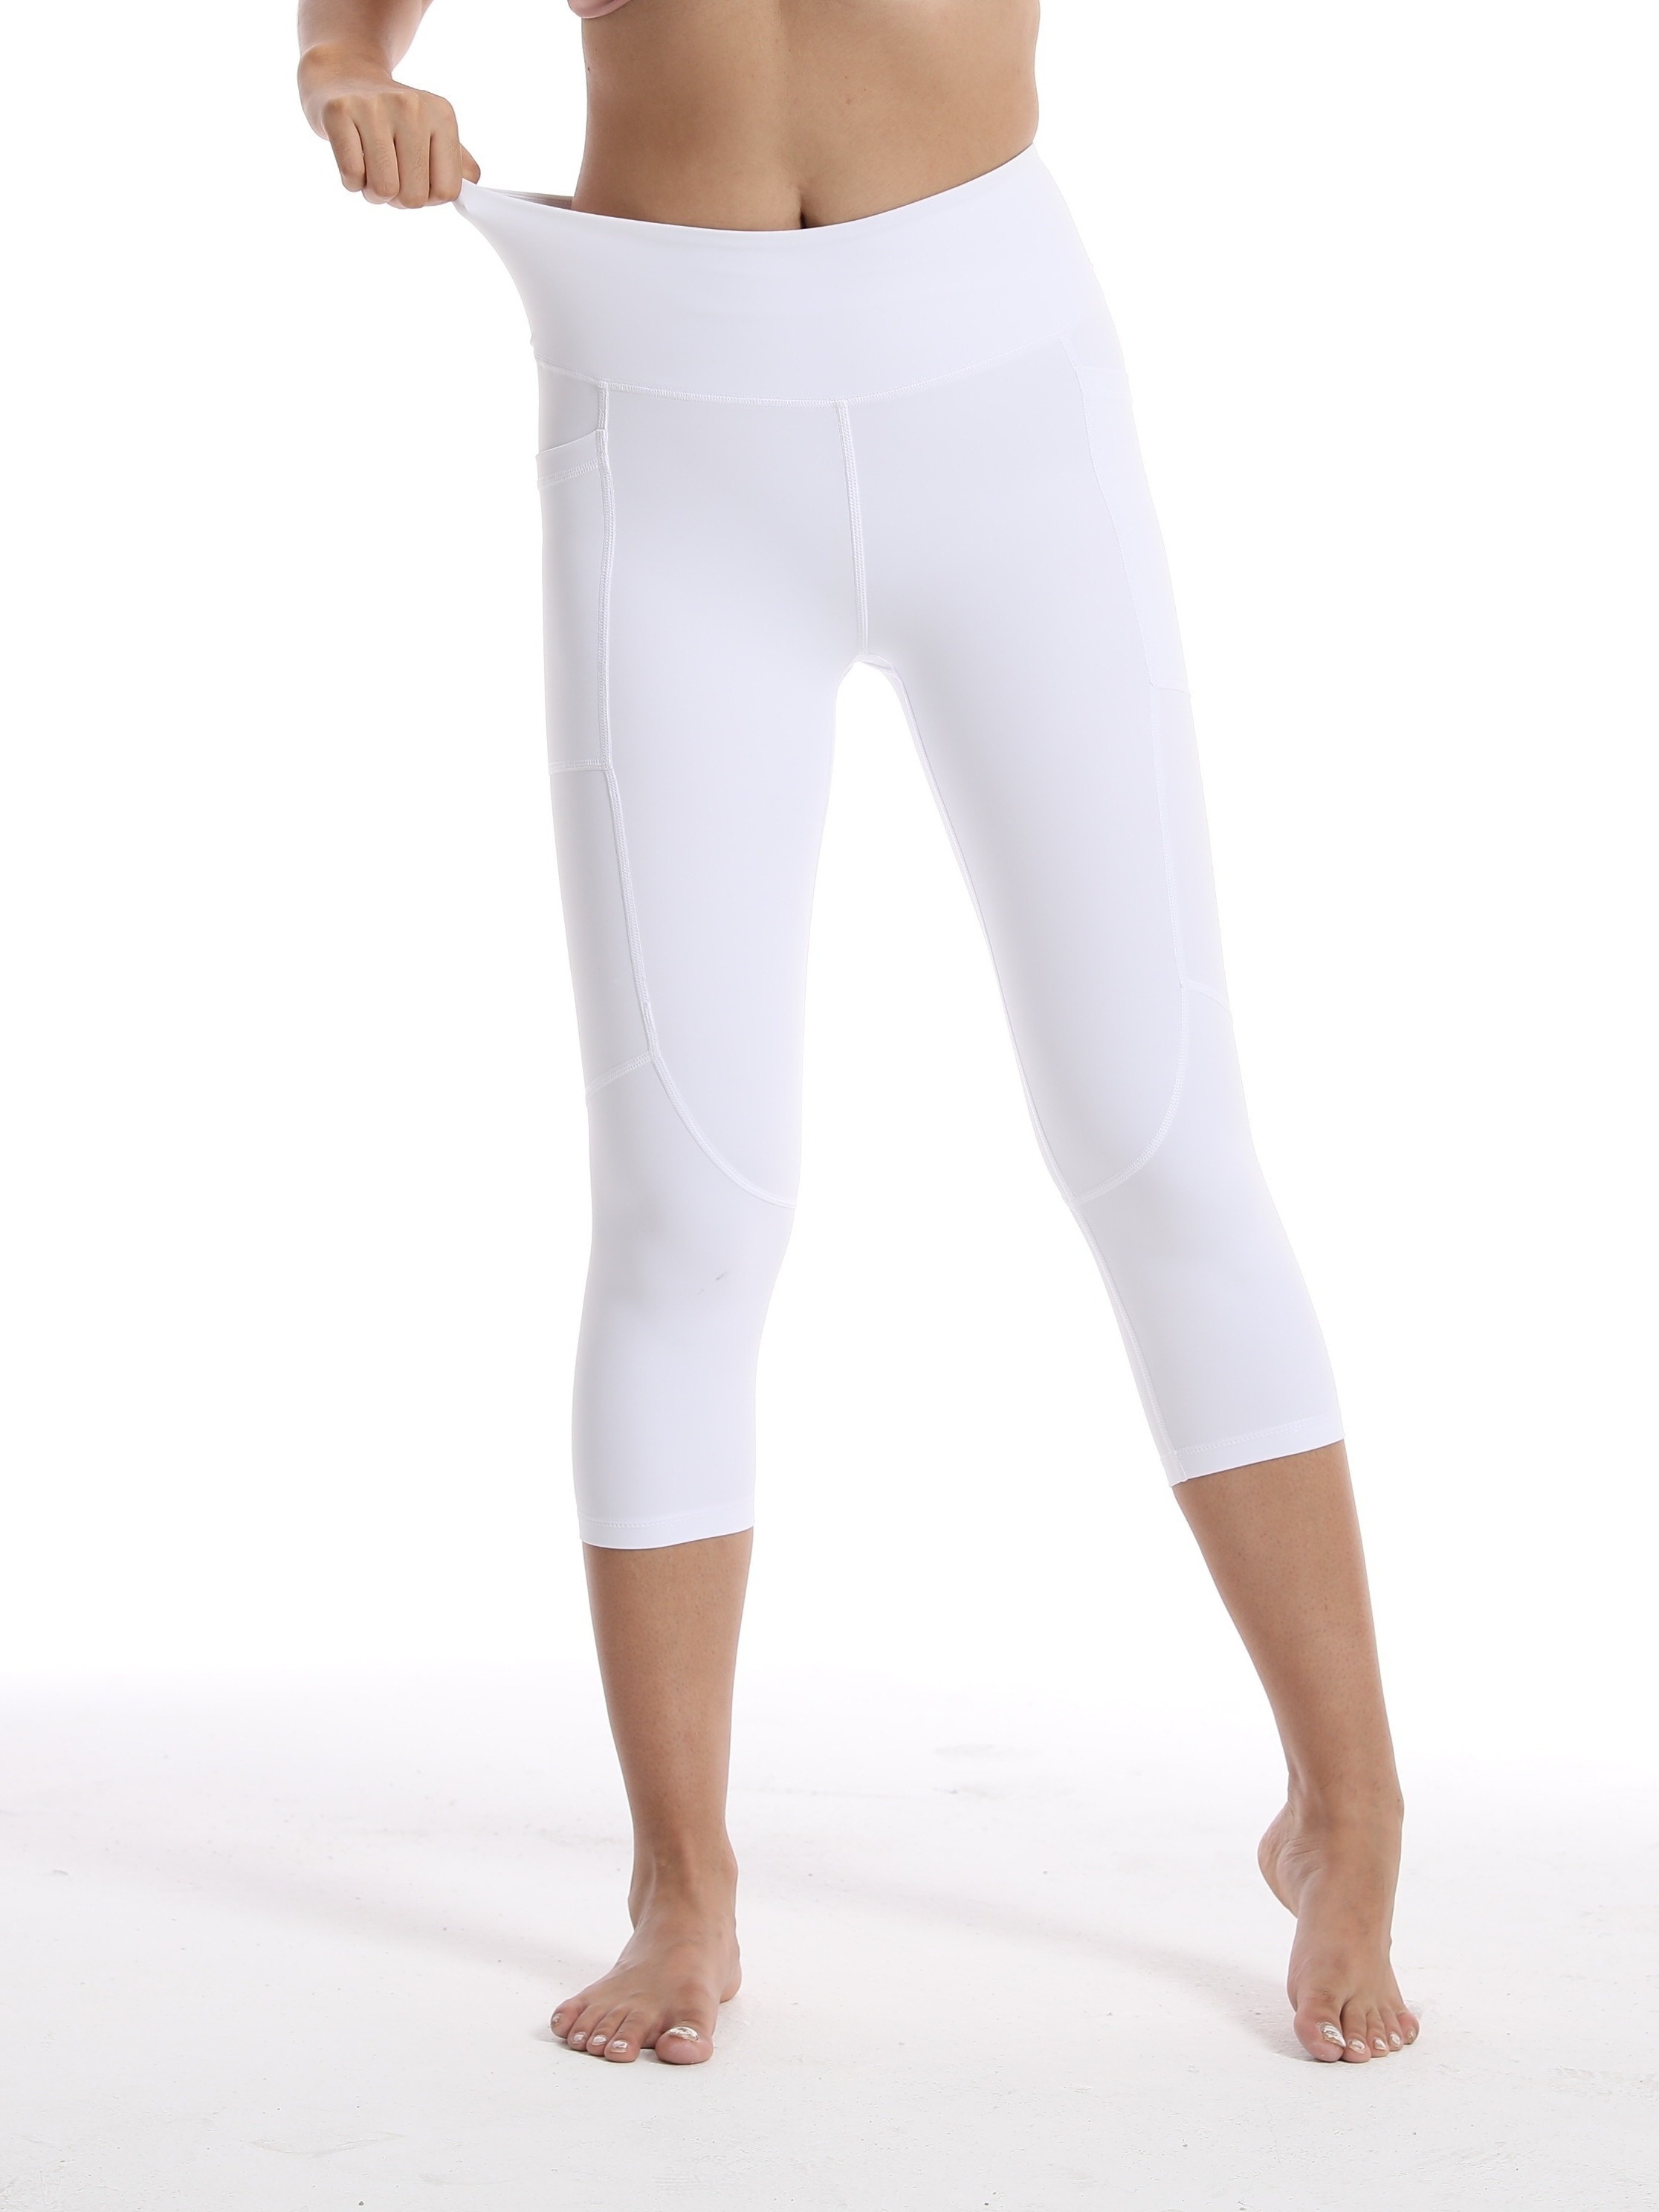 Nymph Leggings WHITE Women Yoga Pants, Leggings, Capris Style, 3